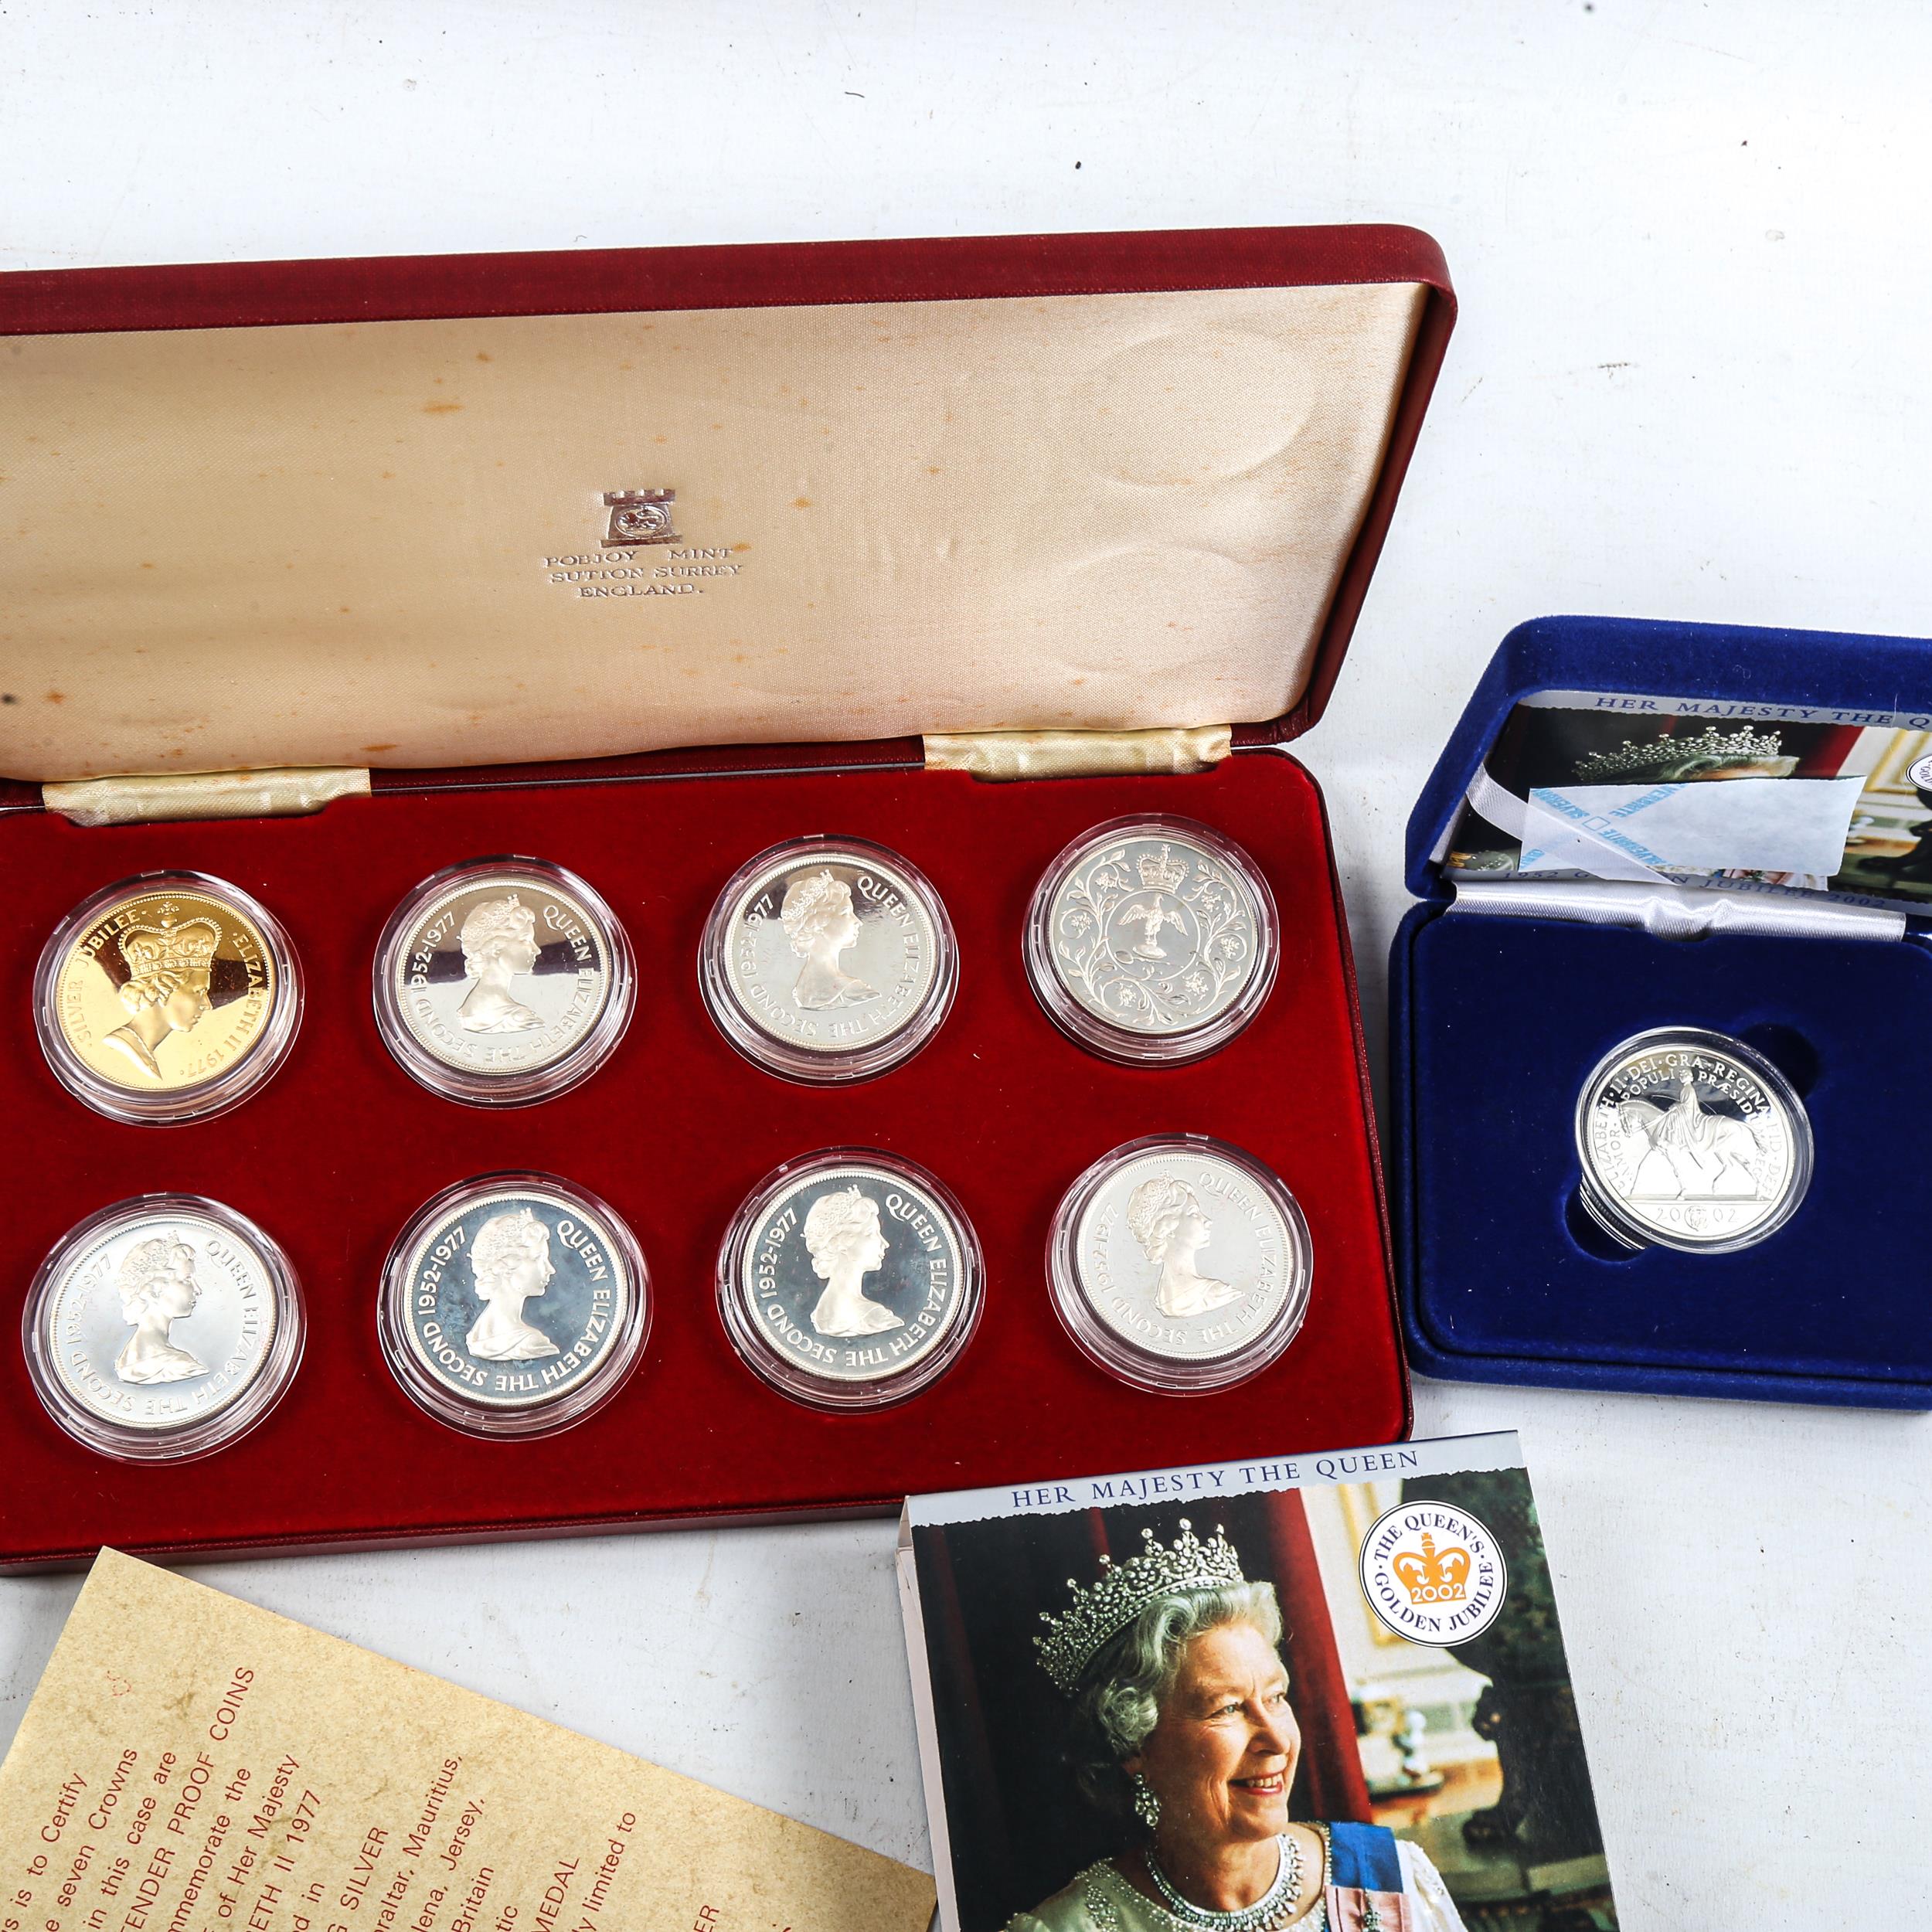 A set of 7 Queen Elizabeth II silver Jubilee sterling silver proof Crown coins, by Pobjoy Mint, - Image 3 of 3